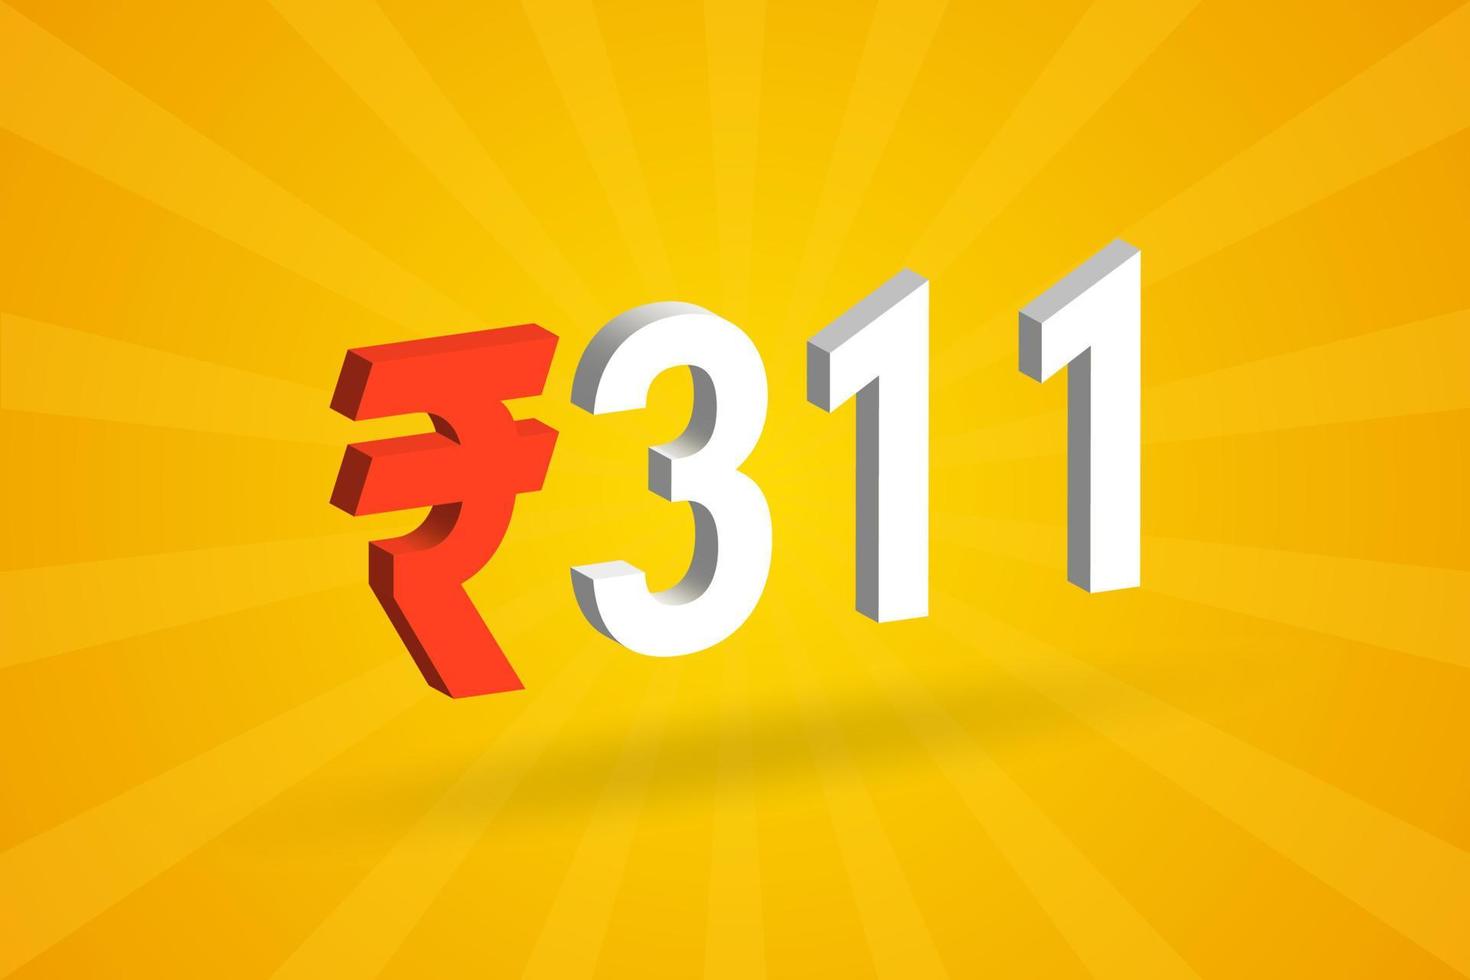 311 rupias símbolo 3d imagen vectorial de texto en negrita. 3d 311 rupia india signo de moneda ilustración vectorial vector